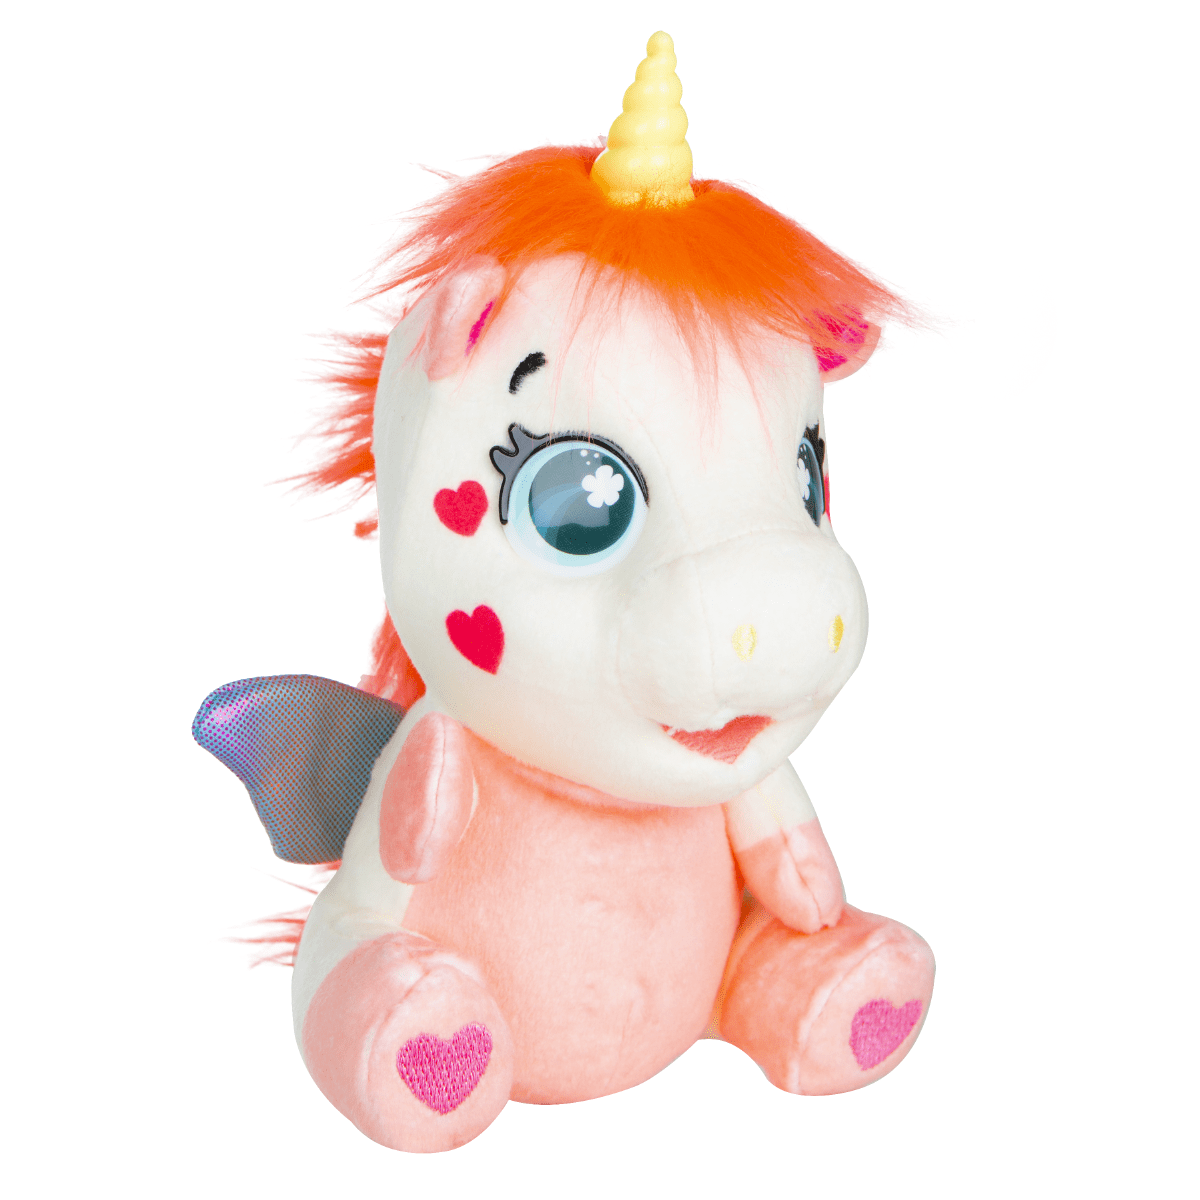 Hug Me Winged Pal Unicorn Plush Stuffed Animal Pink Purple 13” Seated Toy New 